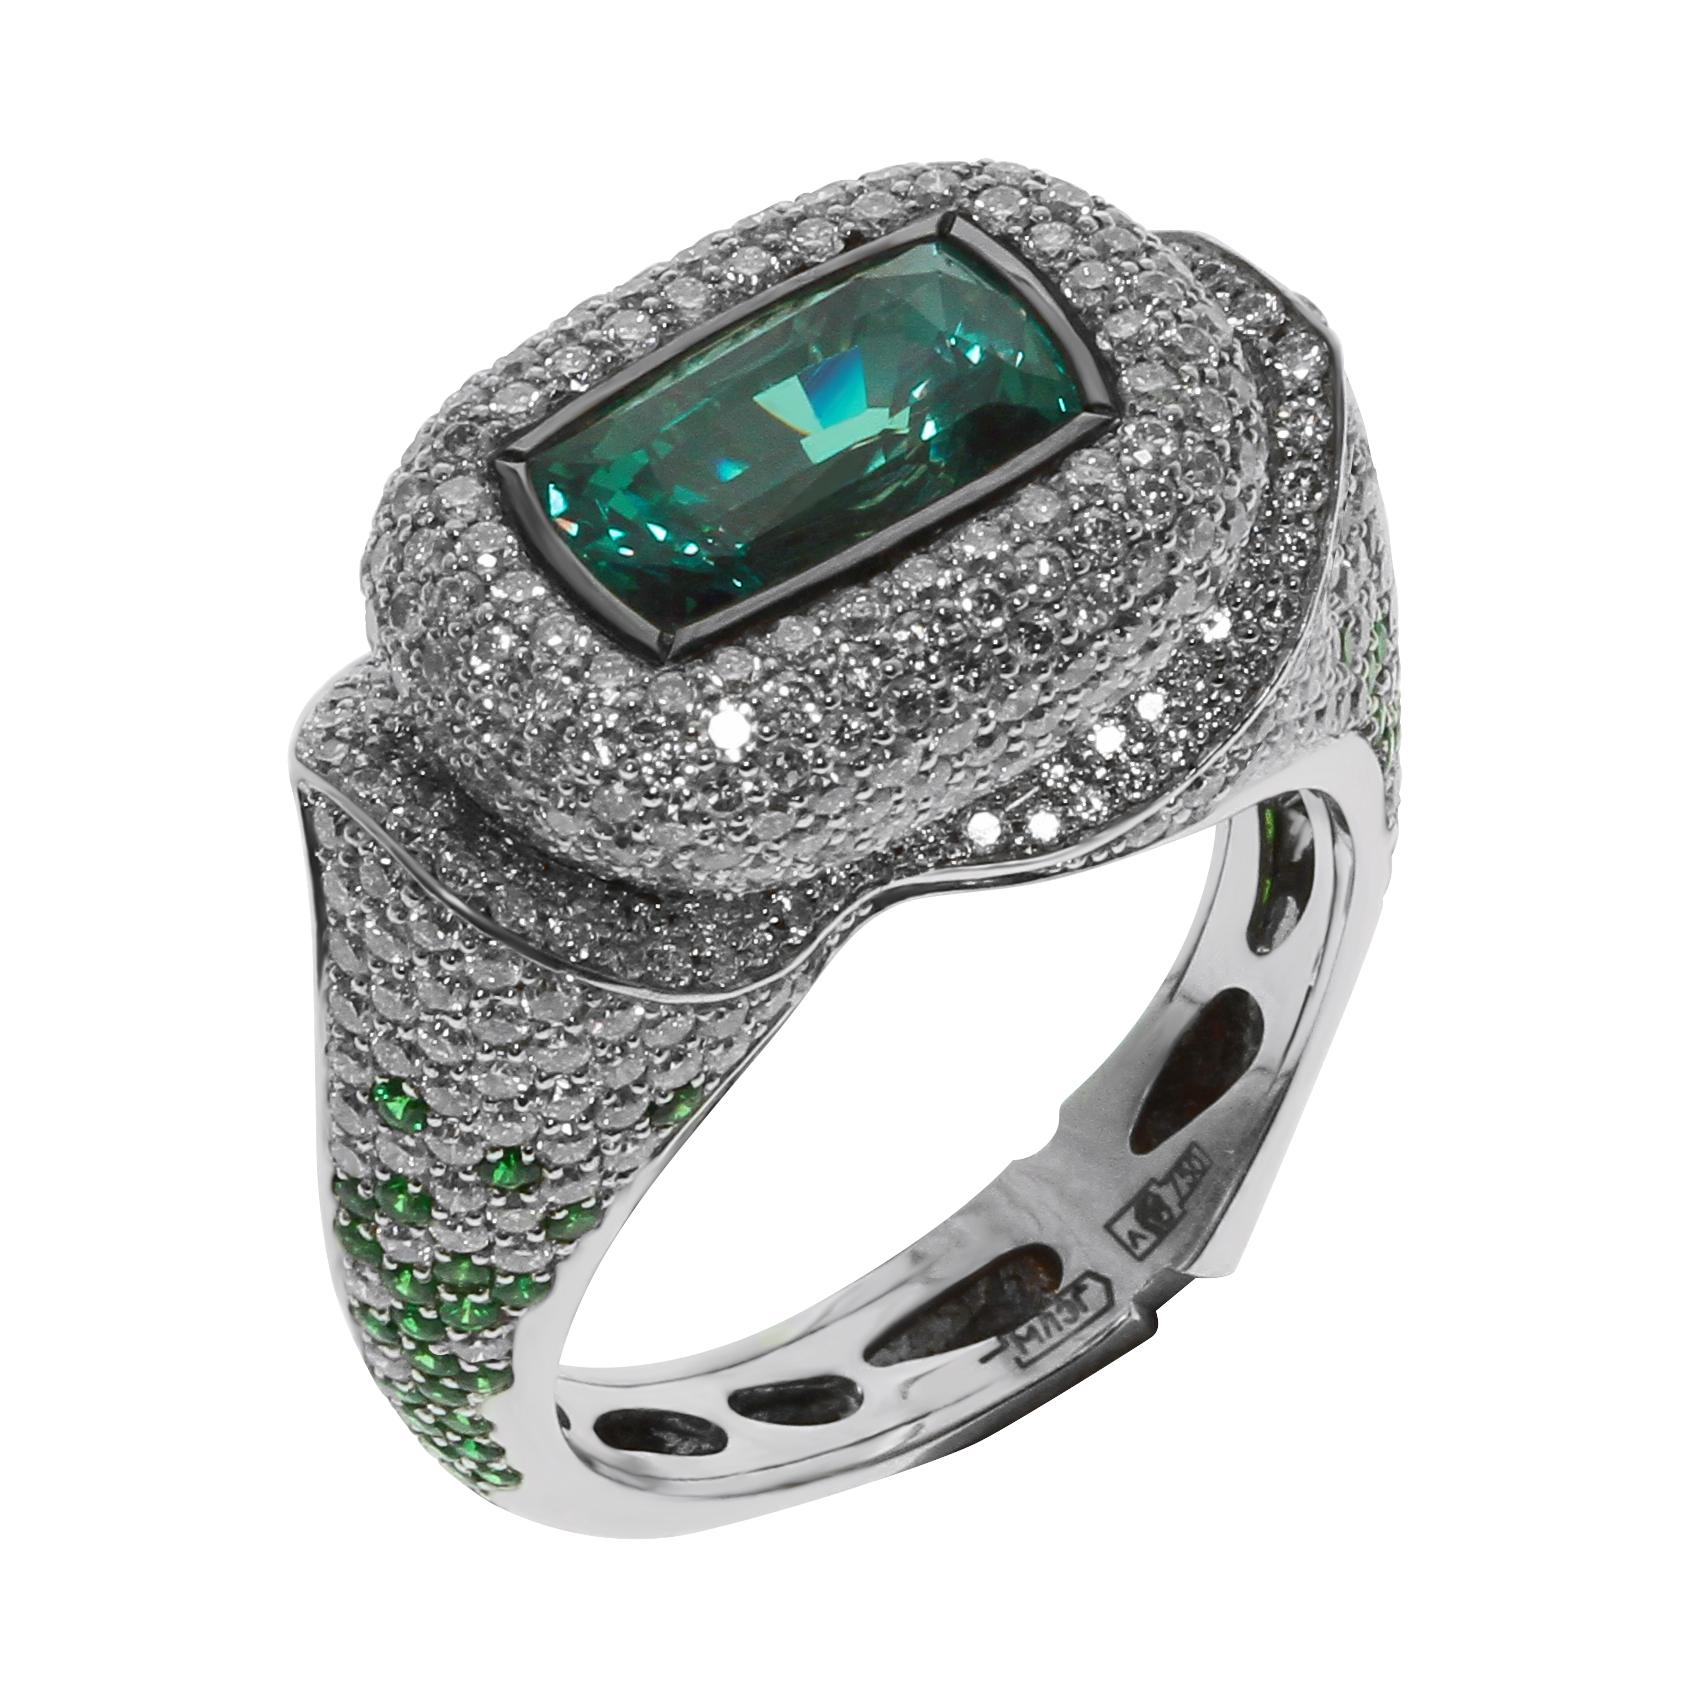 Sri-Lanka Origin 3.12 Carat Alexandrite Diamonds 18 Karat White Gold Ring For Sale